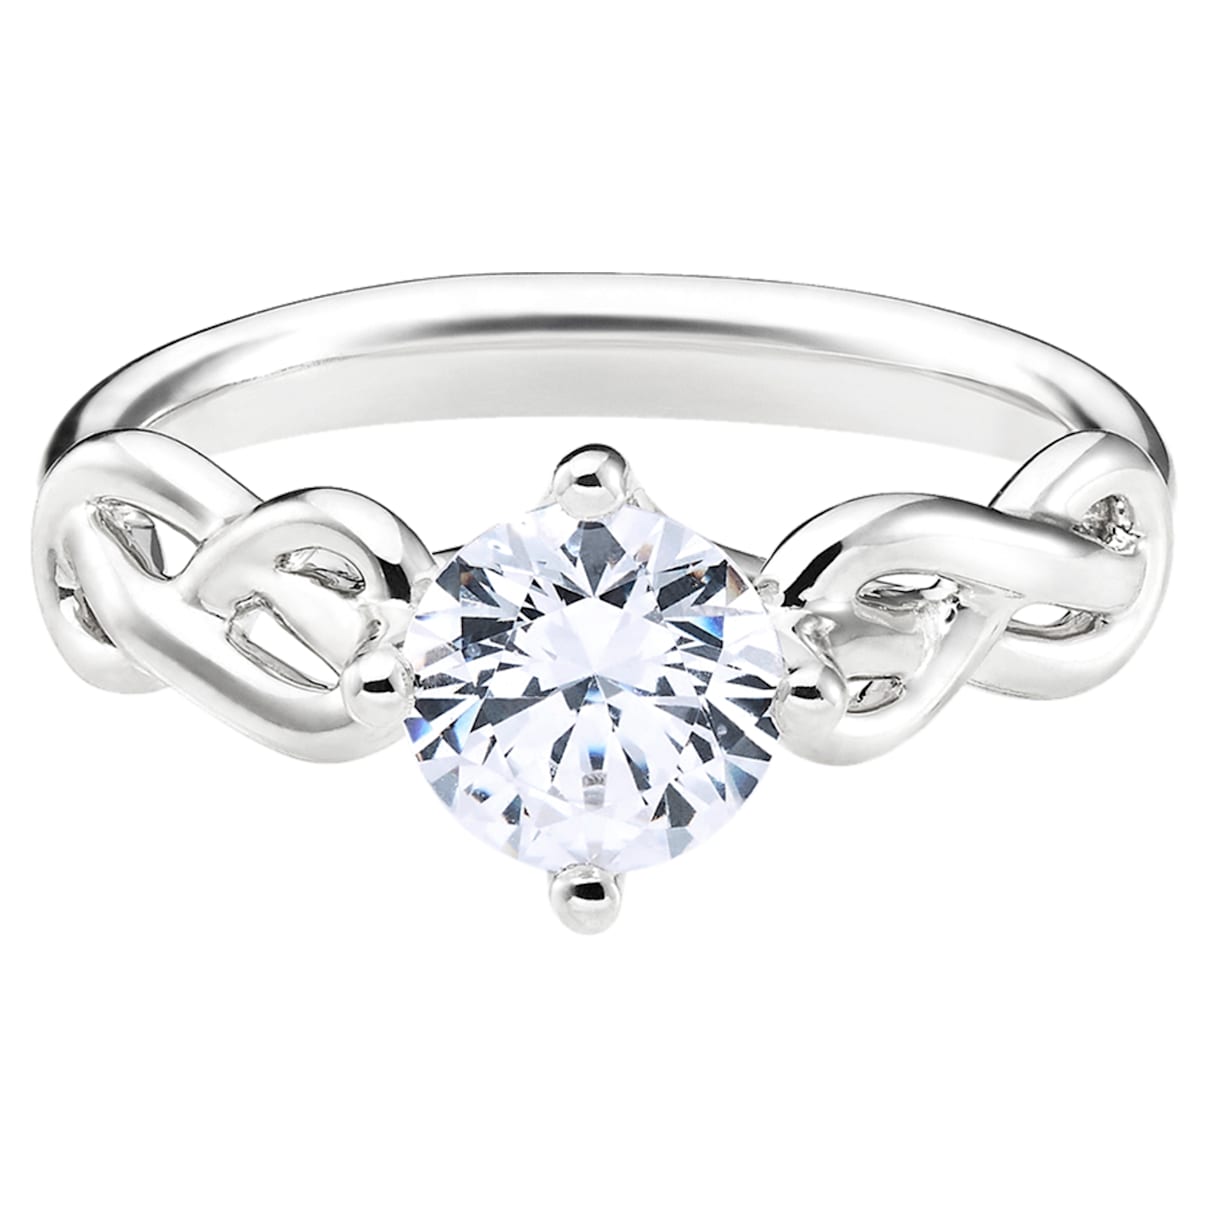 Knot of True Love Solitaire Ring 1ct, Swarovski Created Diamonds, 18K White Gold, Size 55